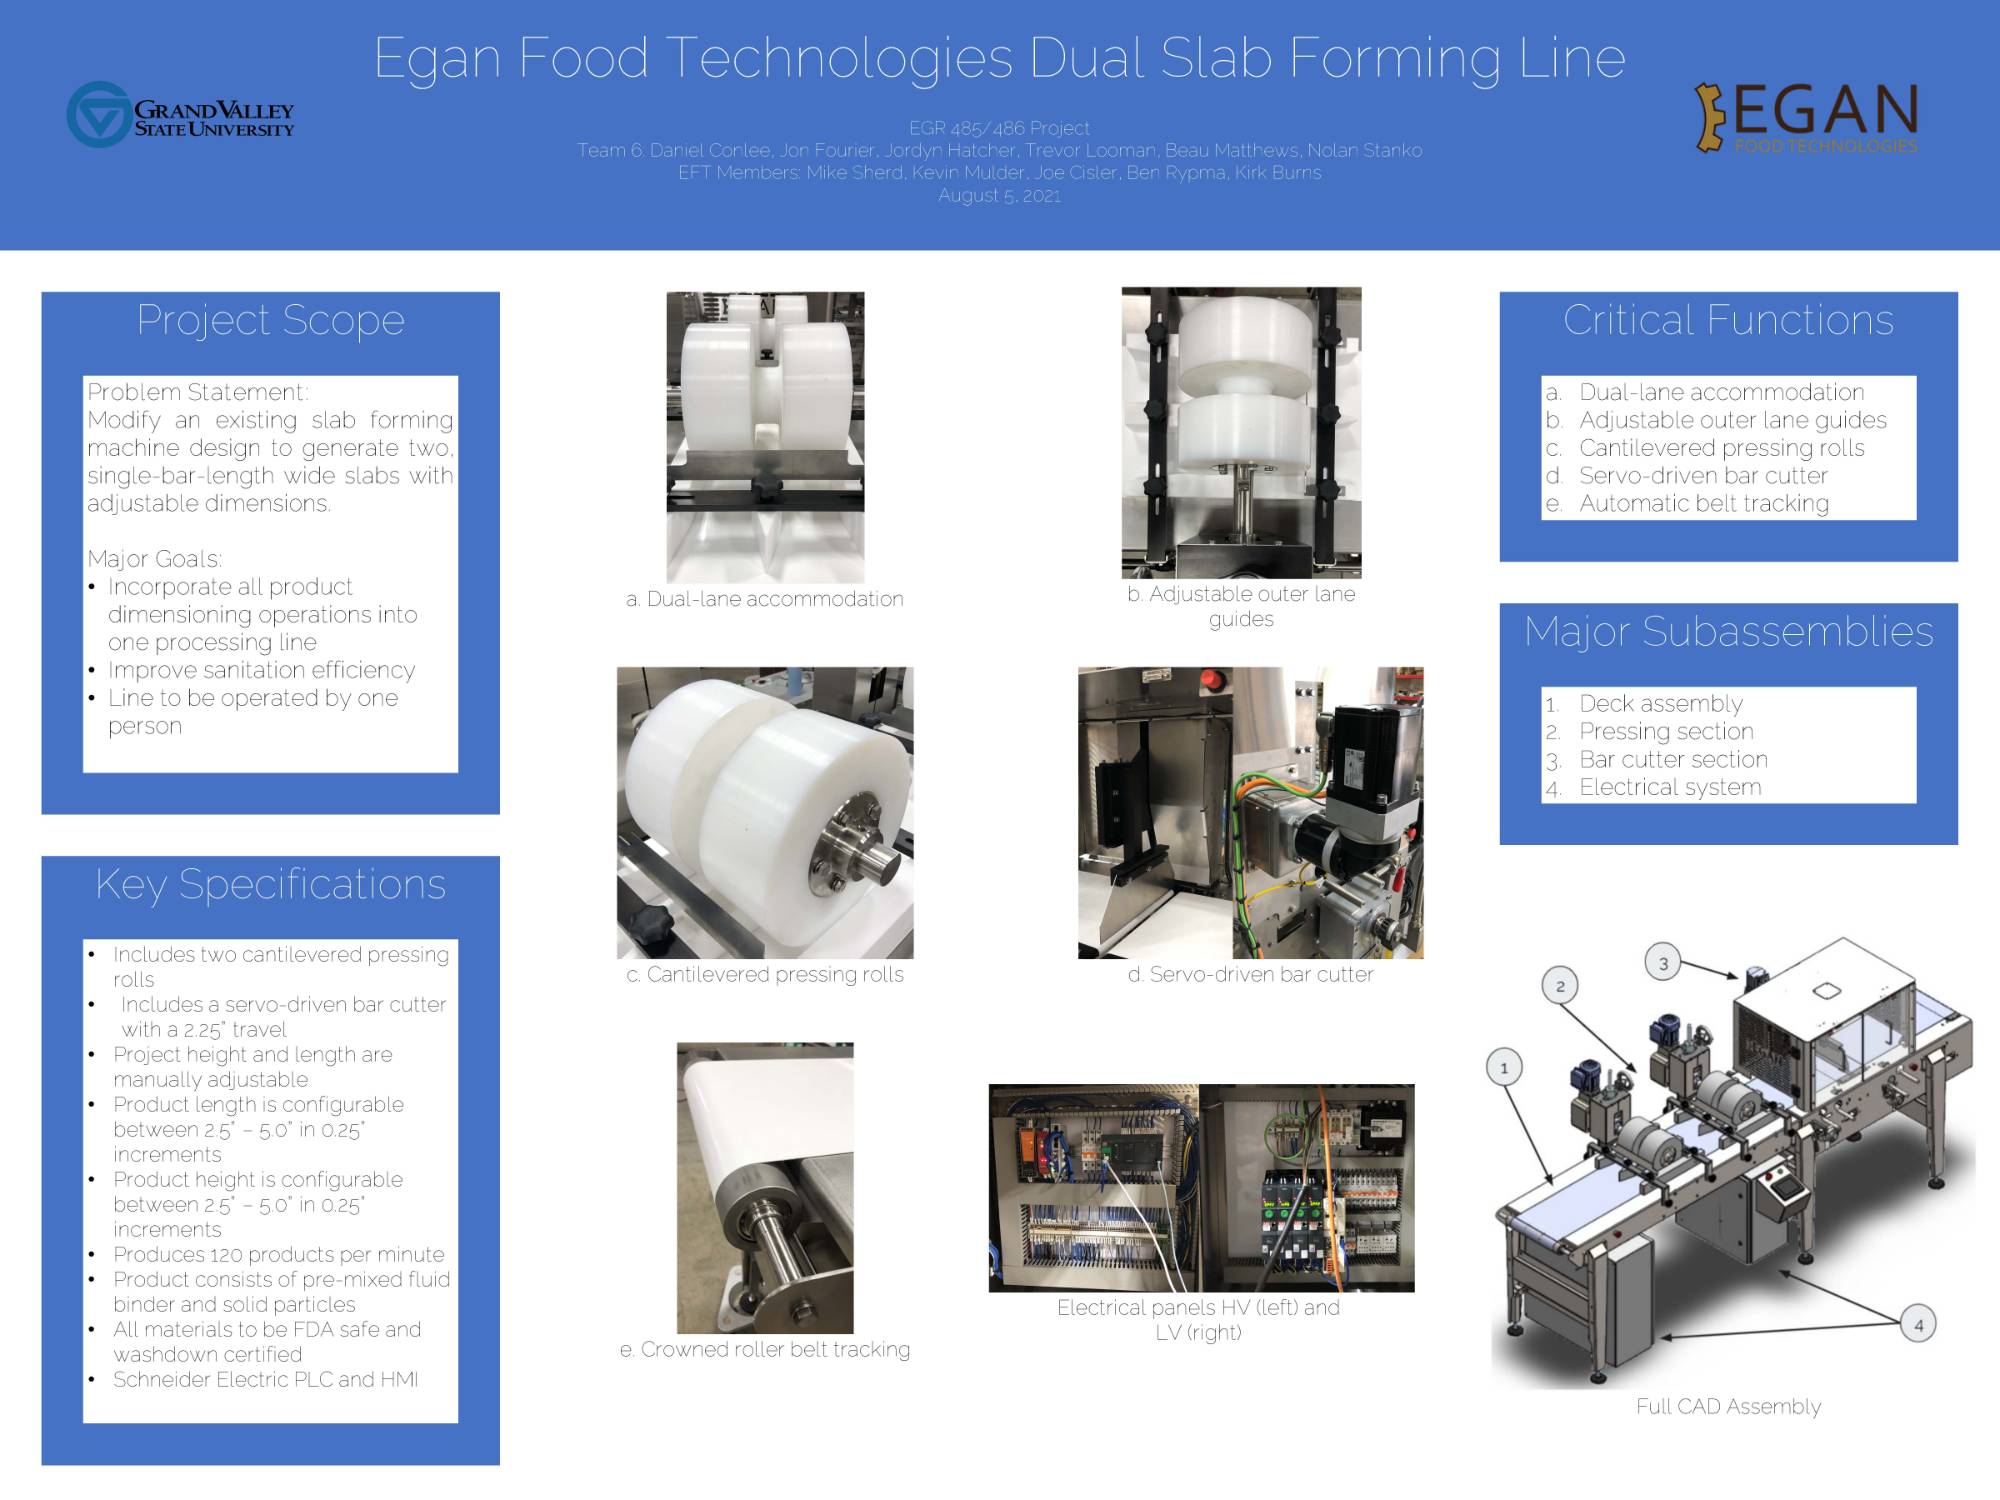 Thumbnail image of Egan Food Technologies senior design poster